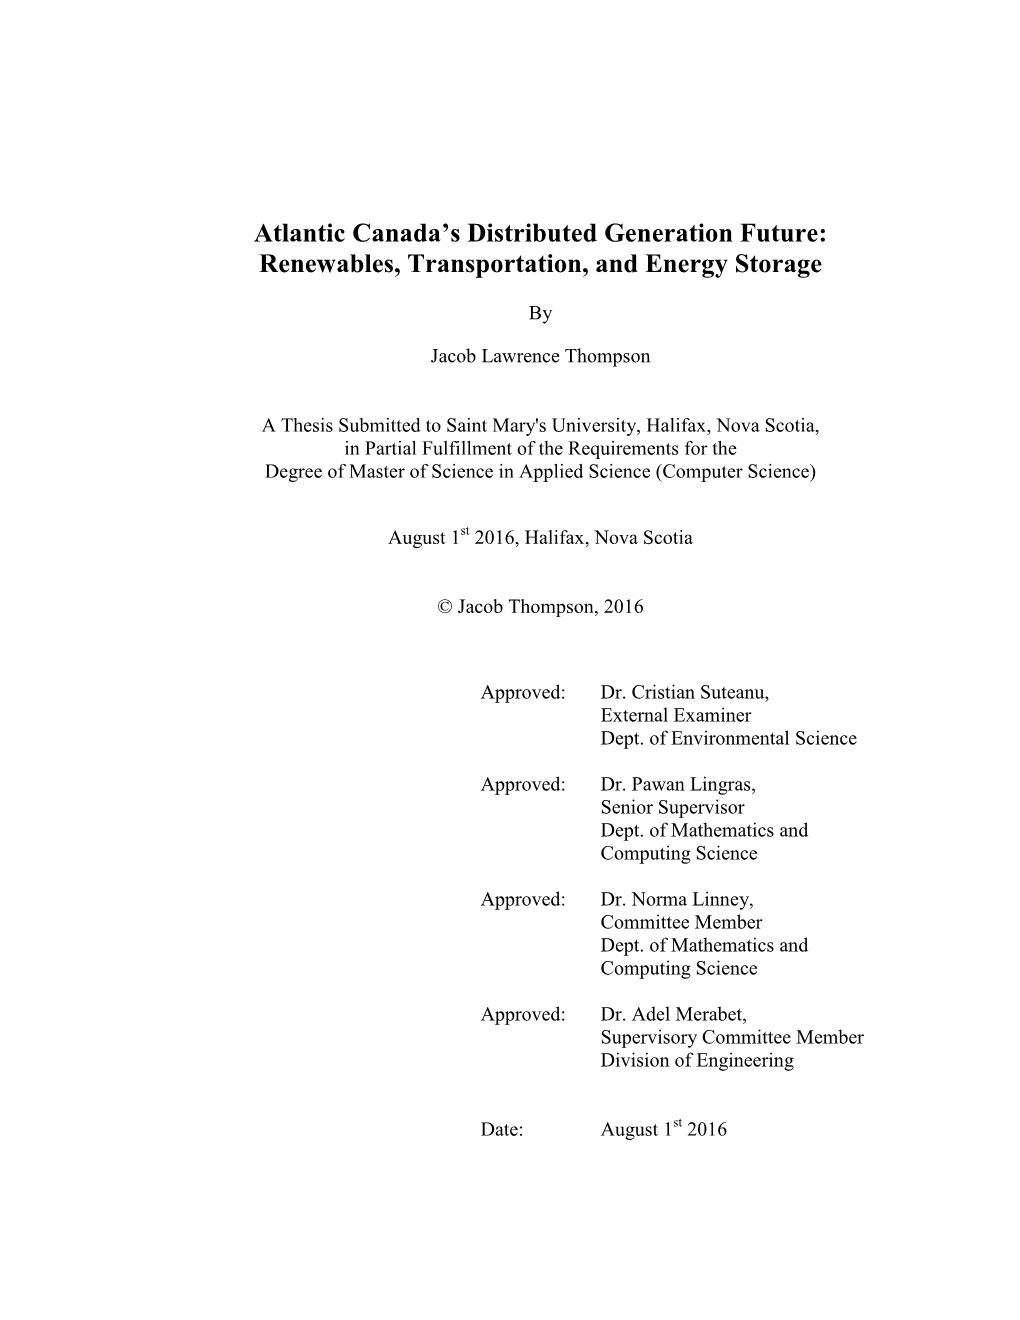 Atlantic Canada's Distributed Generation Future: Renewables, Transportation, and Energy Storage